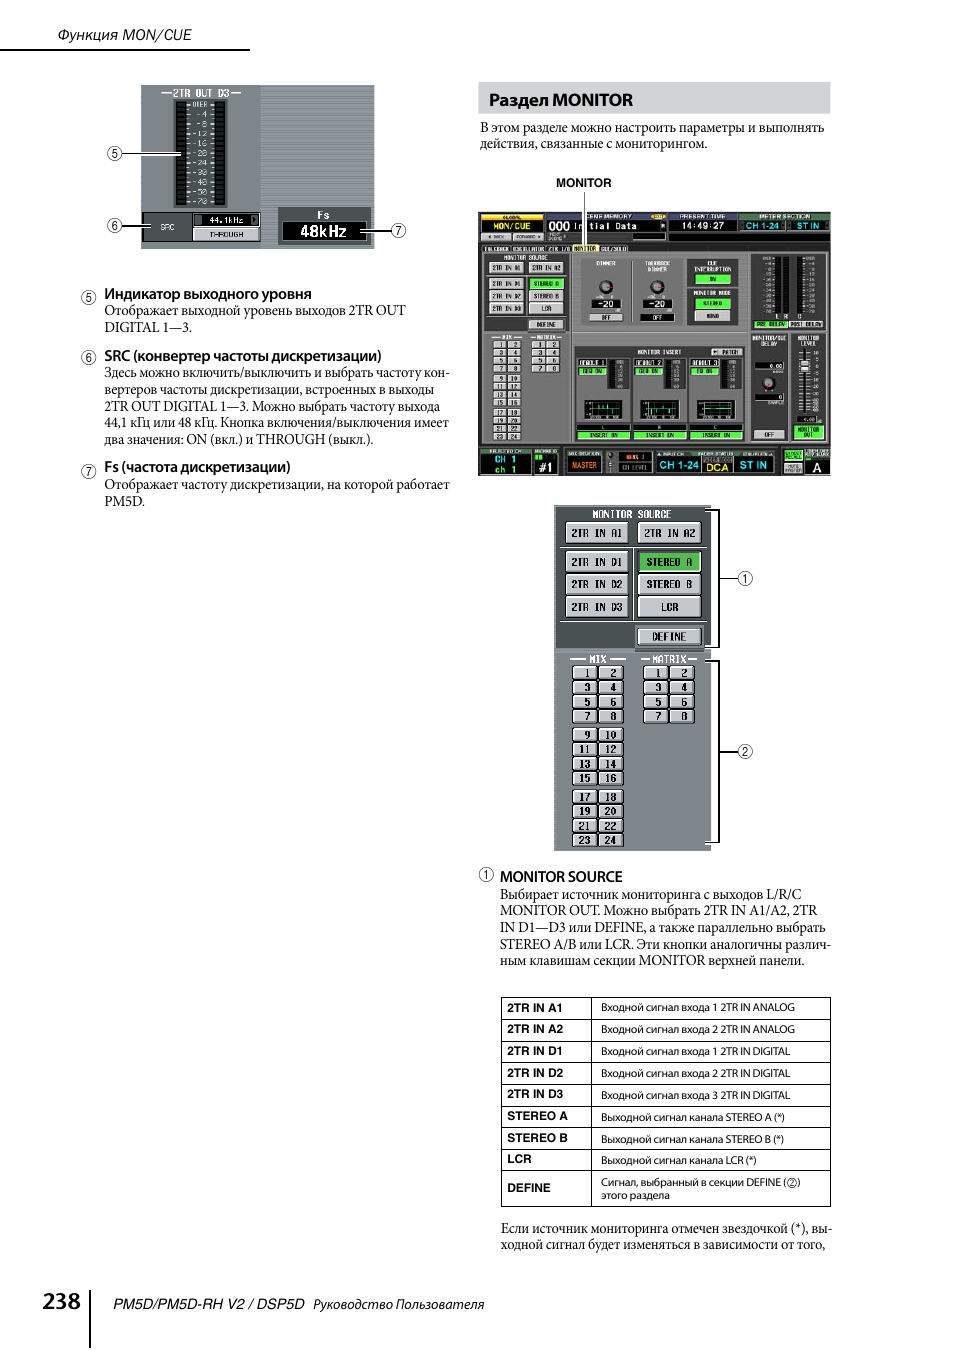 Раздел monitor | Инструкция по эксплуатации Yamaha DSP5D | Страница 238 / 341